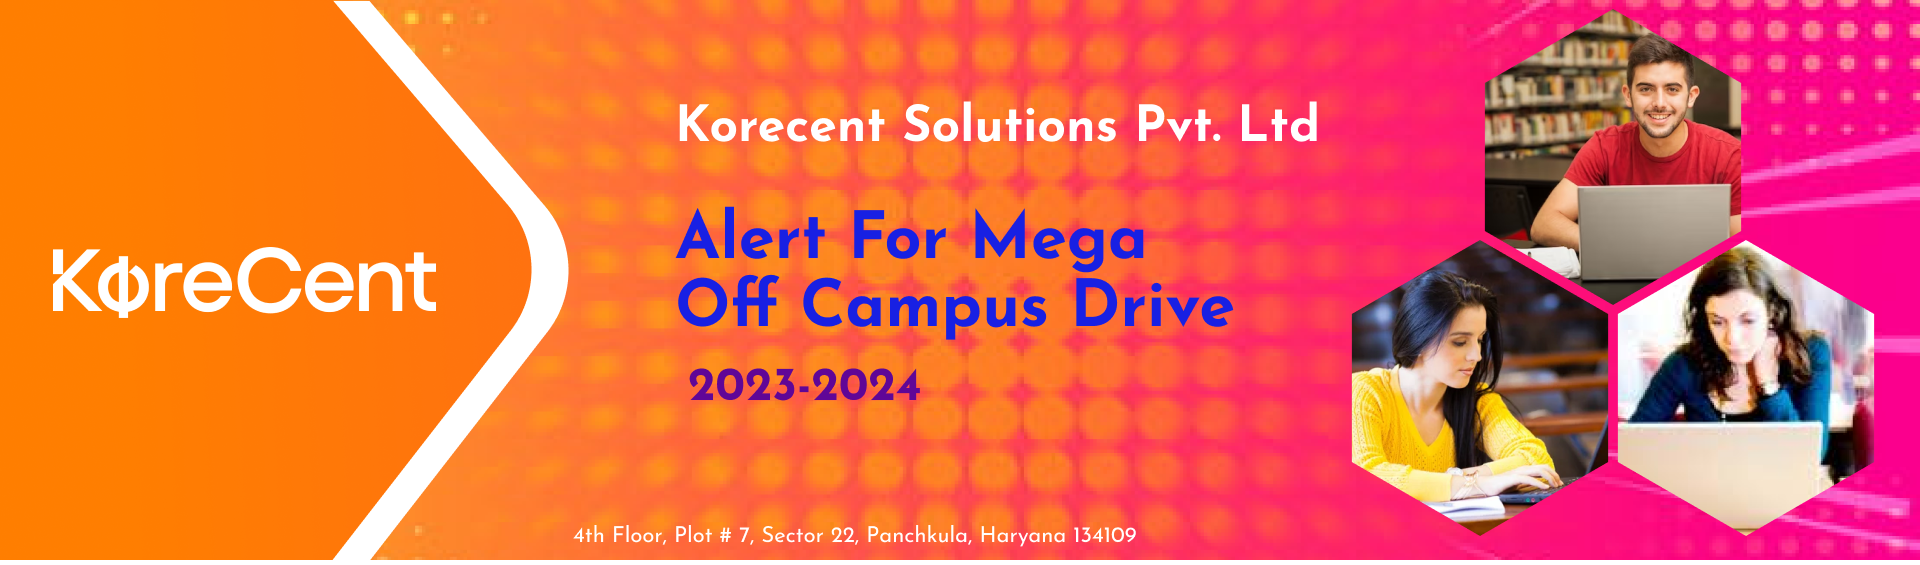 Korecent Solutions